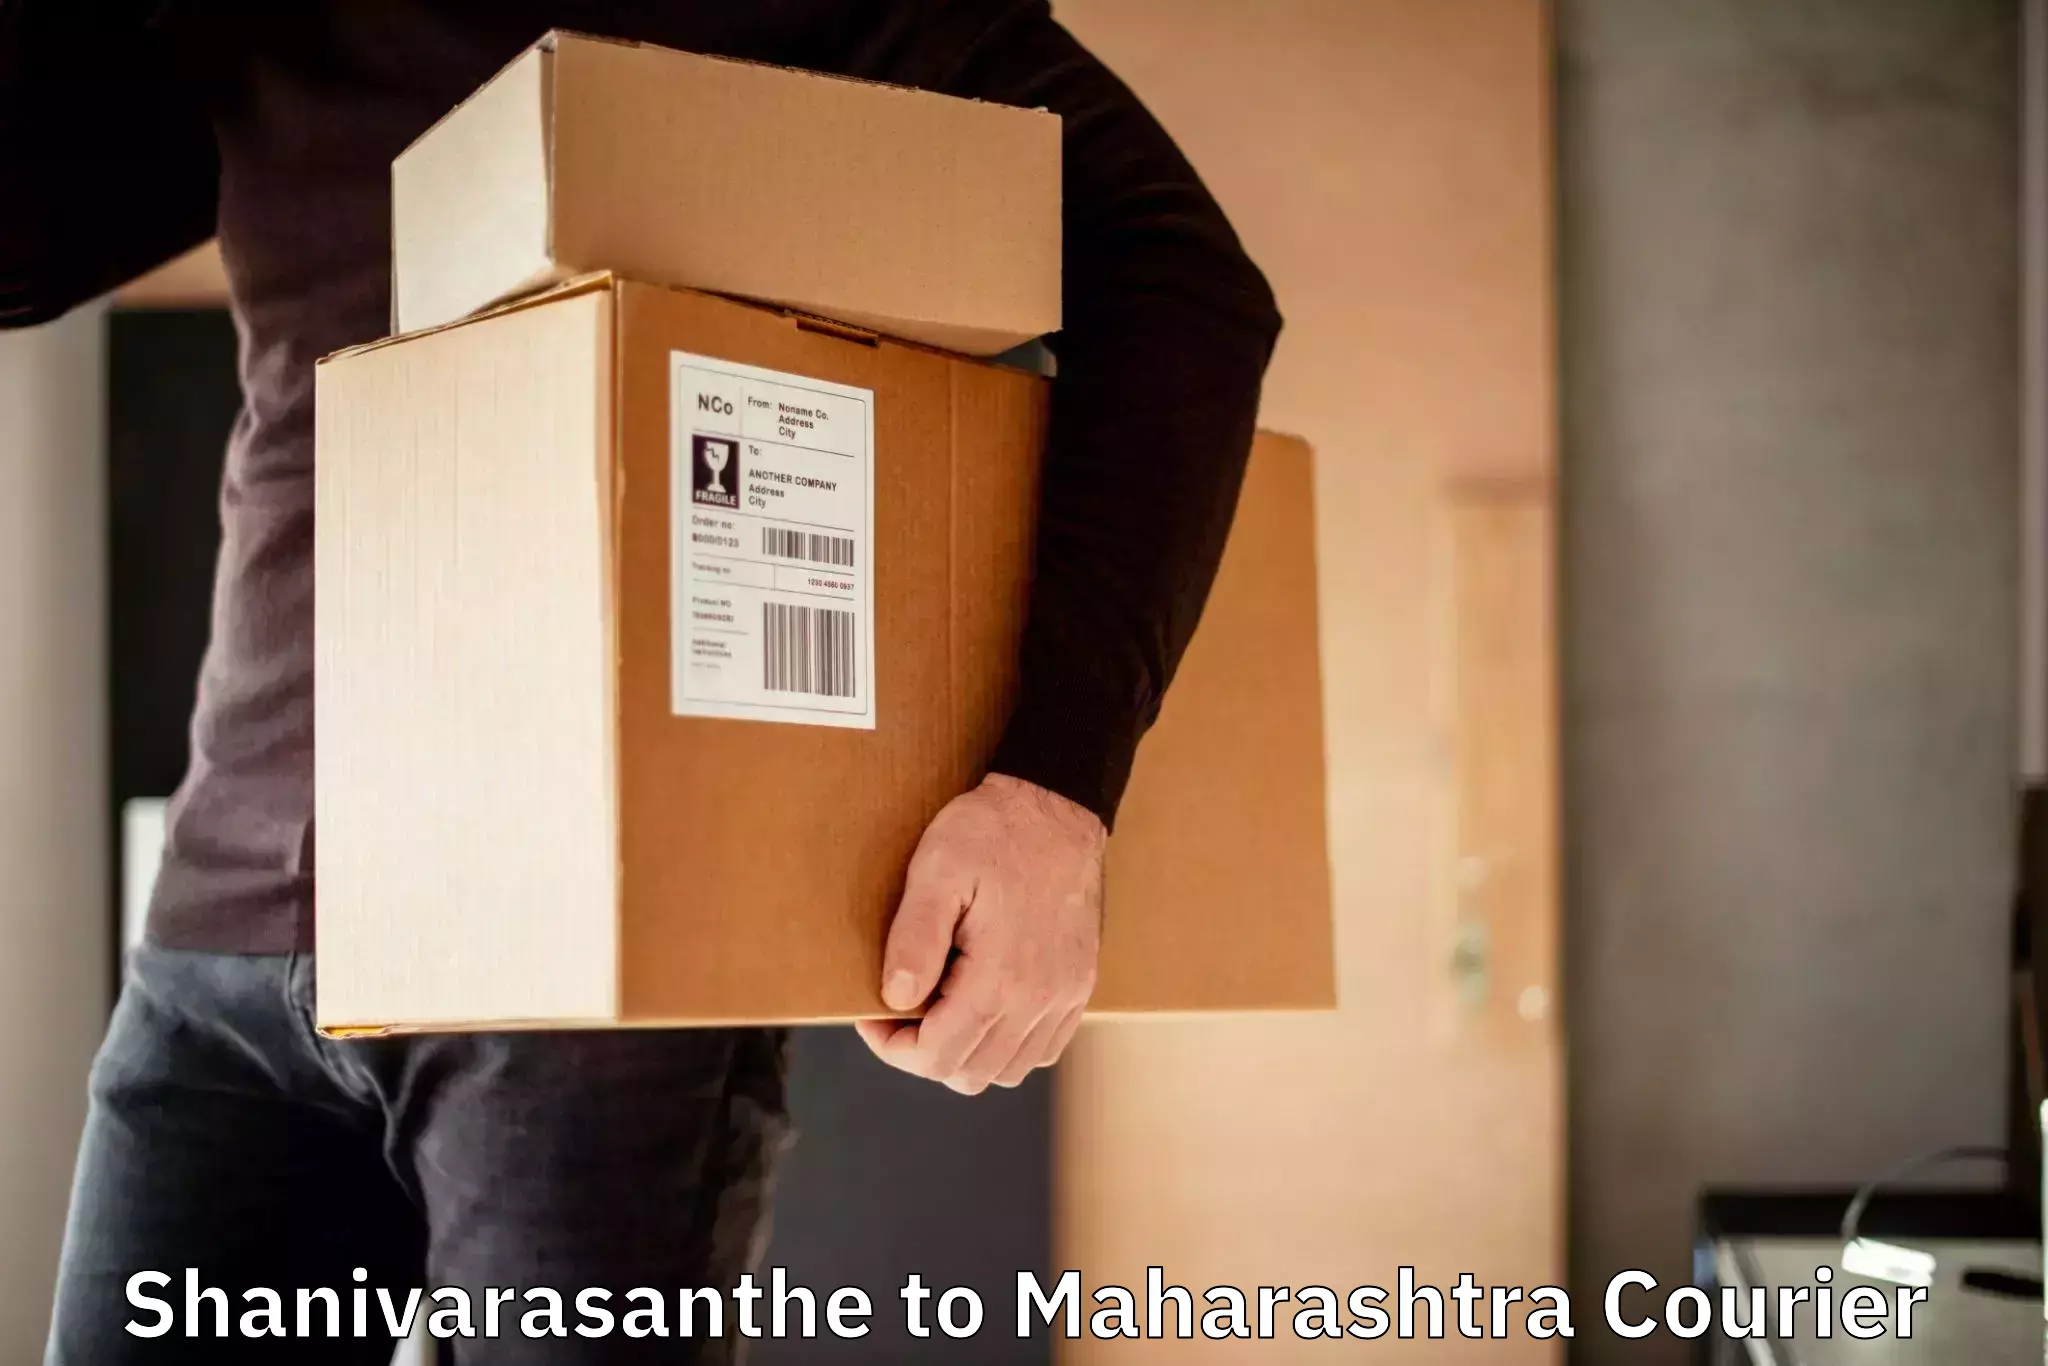 Package delivery network Shanivarasanthe to Lonavala